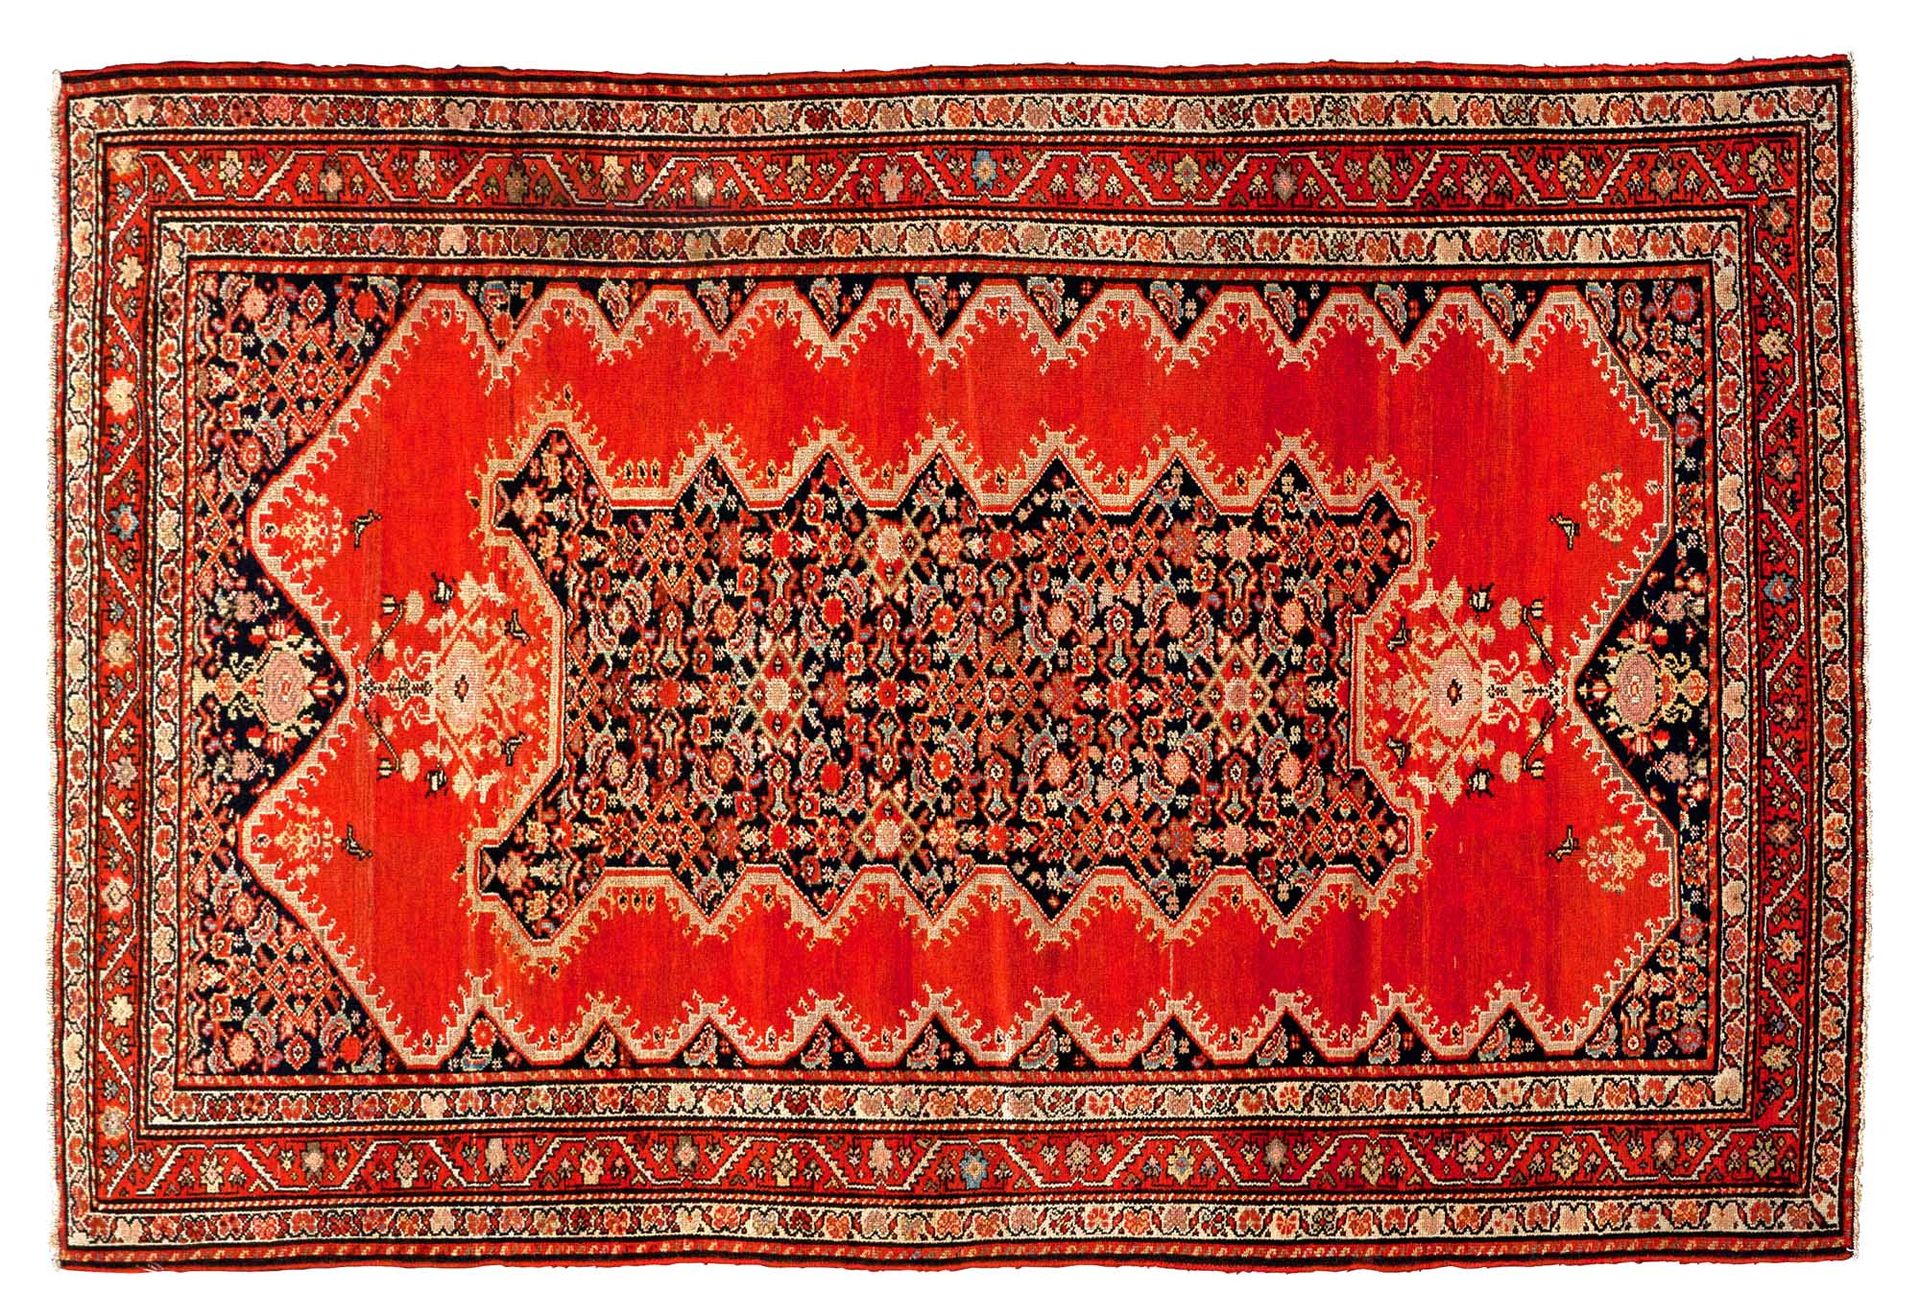 Null MELAYER carpet (Persia), late 19th century

Dimensions : 200 x 115cm

Techn&hellip;